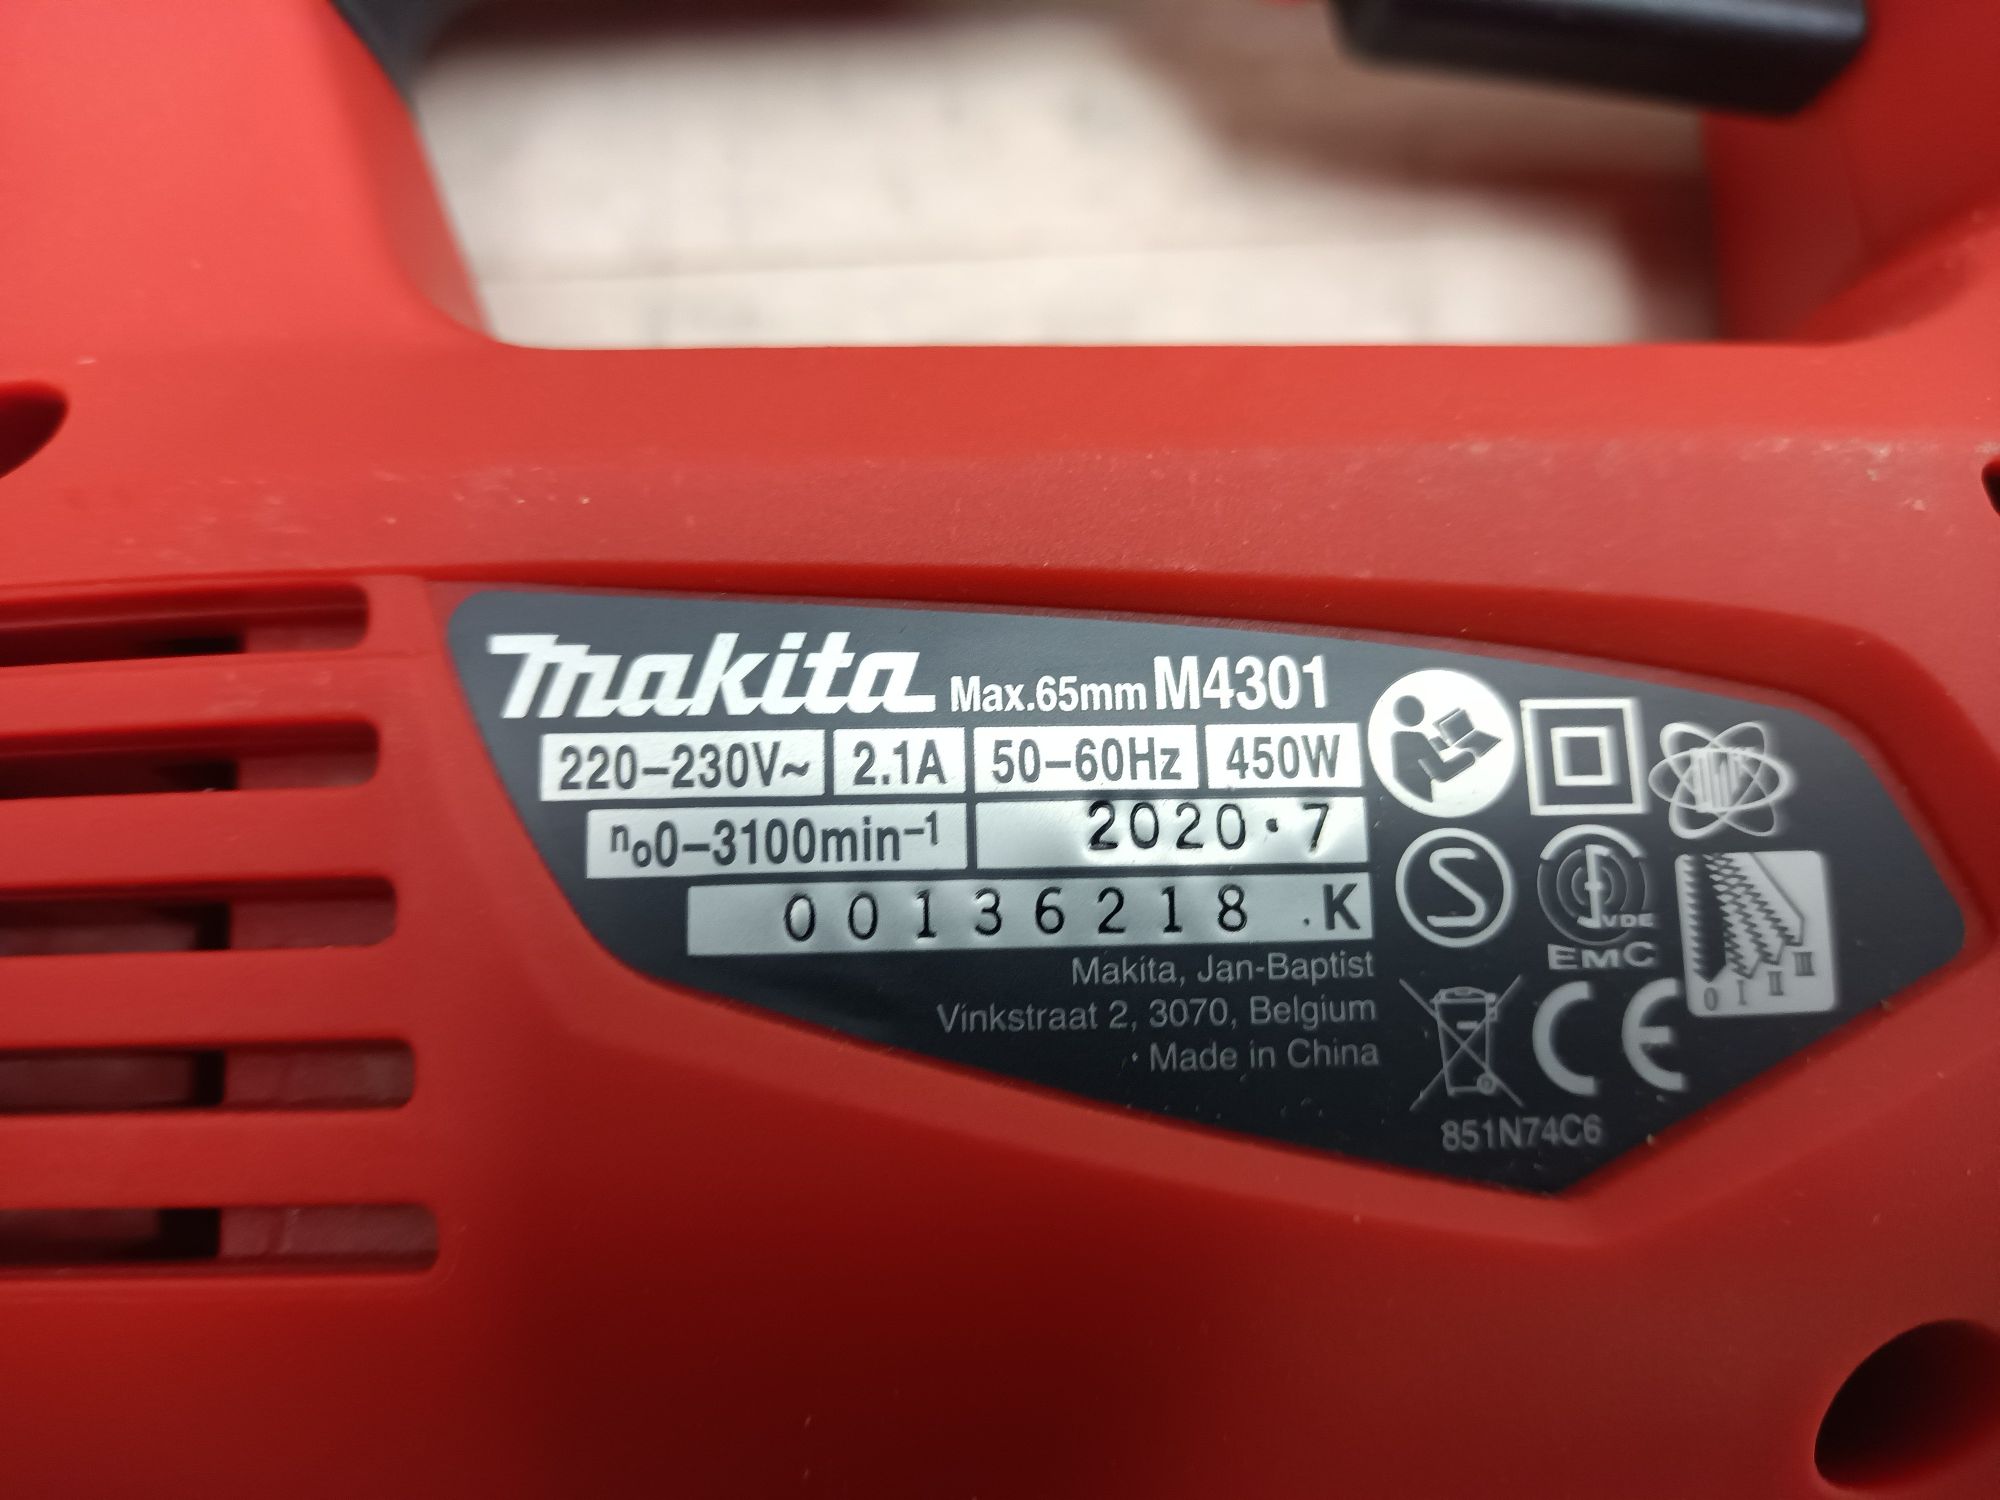 Makita MT M4301 электролобзик, 450 Вт, лобзик, оригинал